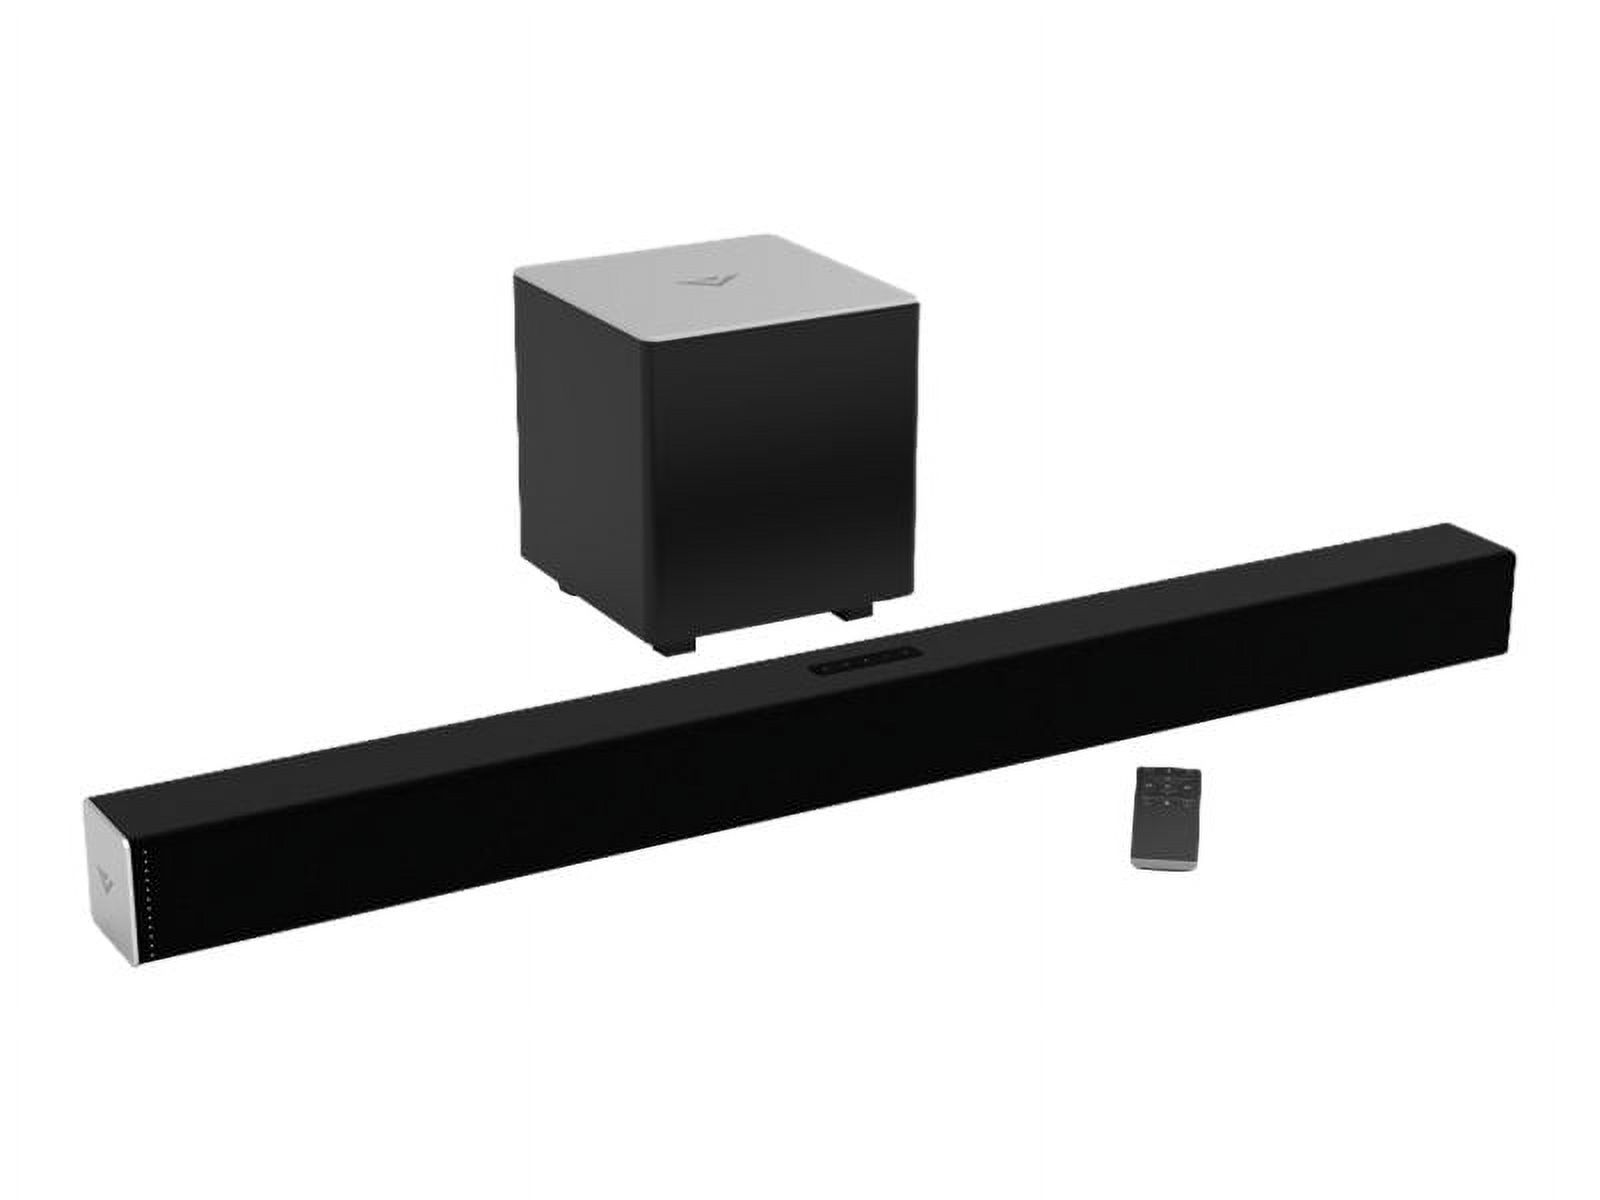 VIZIO SmartCast 38" SB3831-D0 - Sound bar system - for TV - 3.1-channel - wireless - Ethernet, Wi-Fi, Bluetooth - black - image 2 of 10